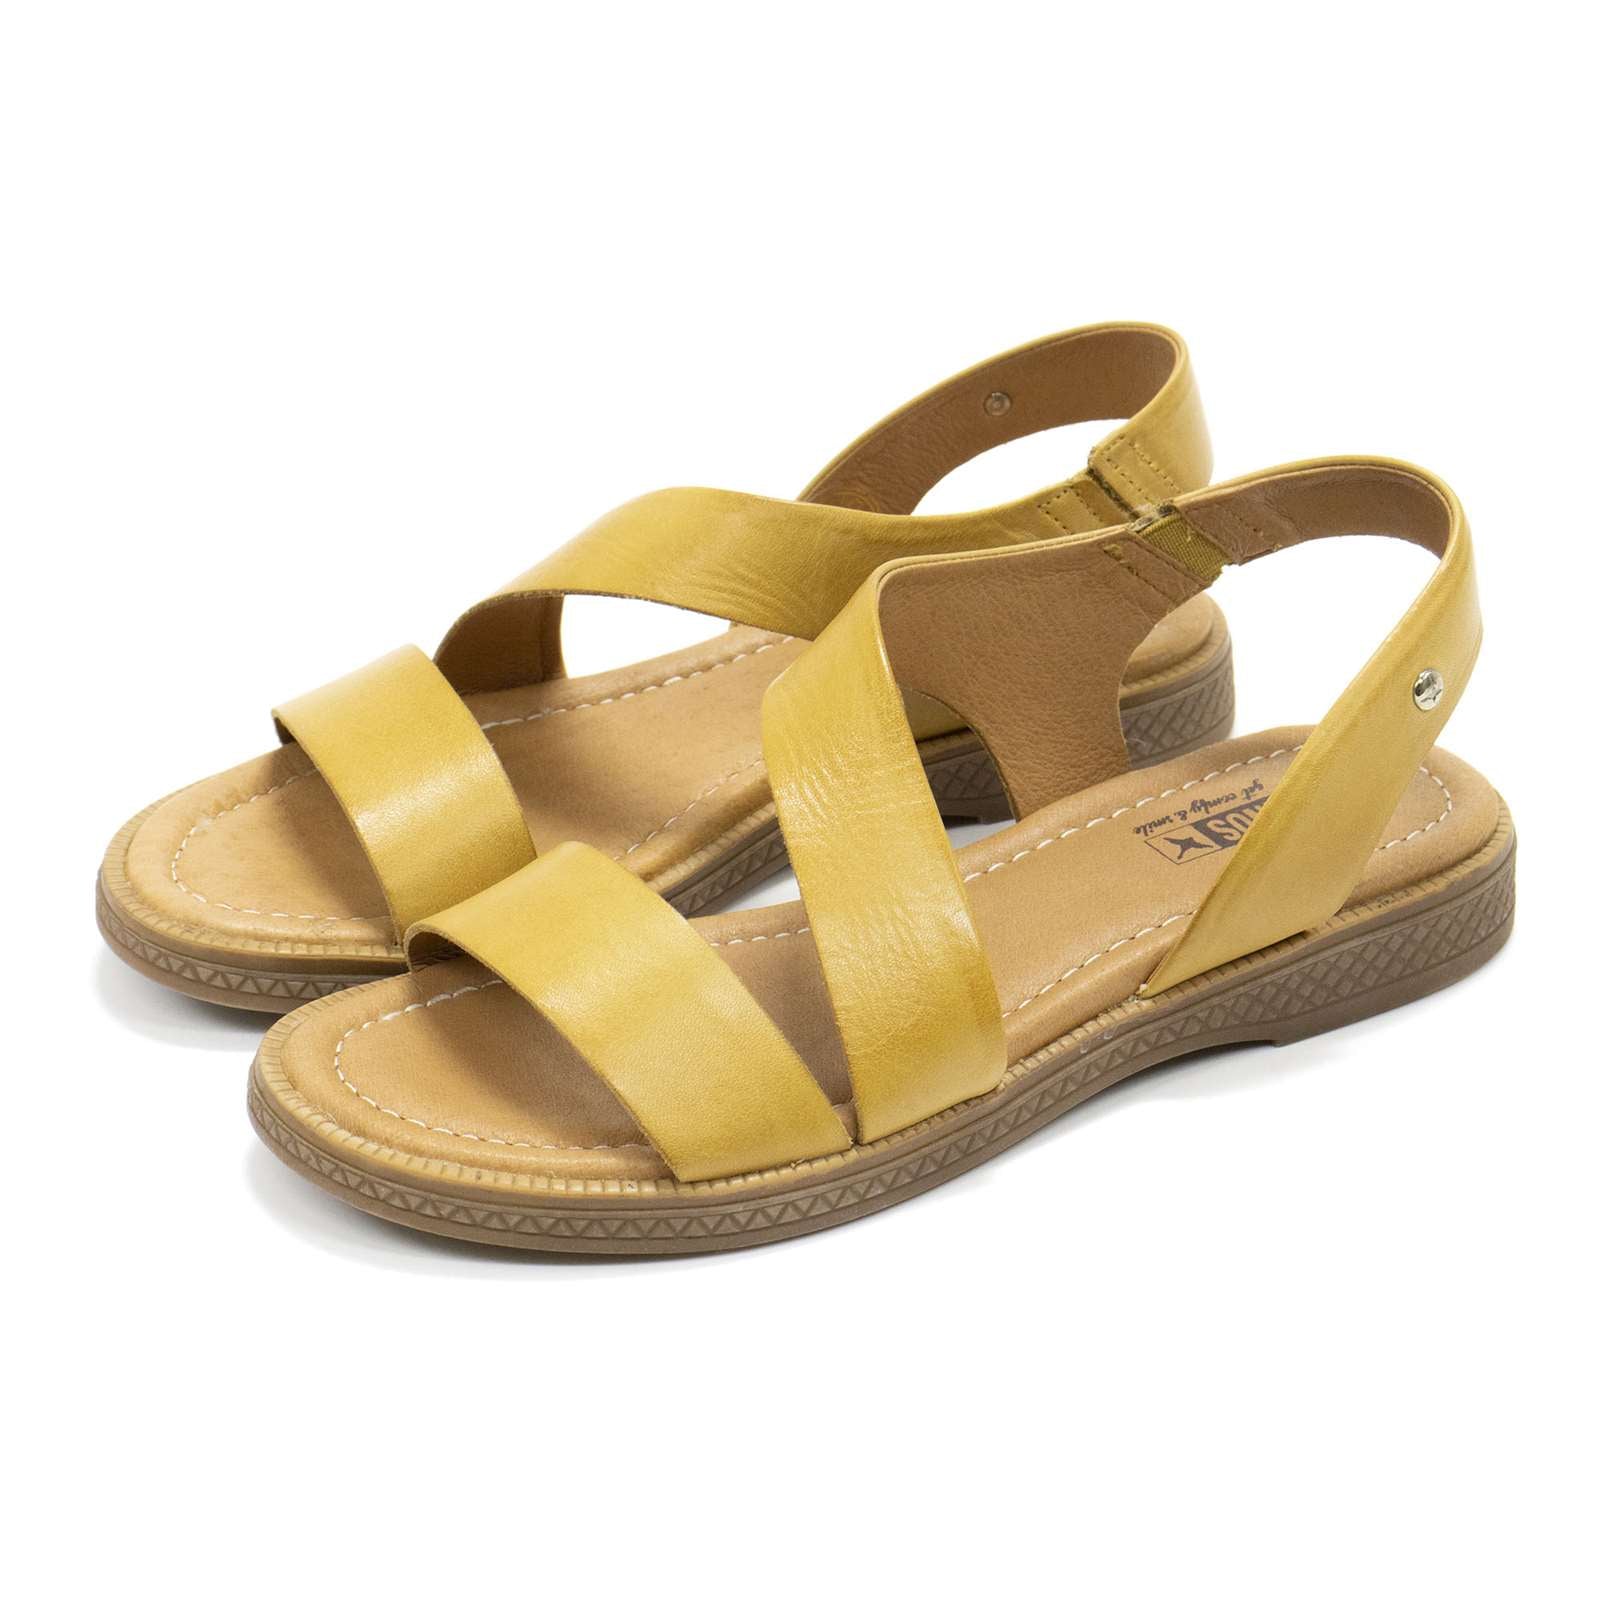 Pikolinos Women Moraira Leather Flat Sandals